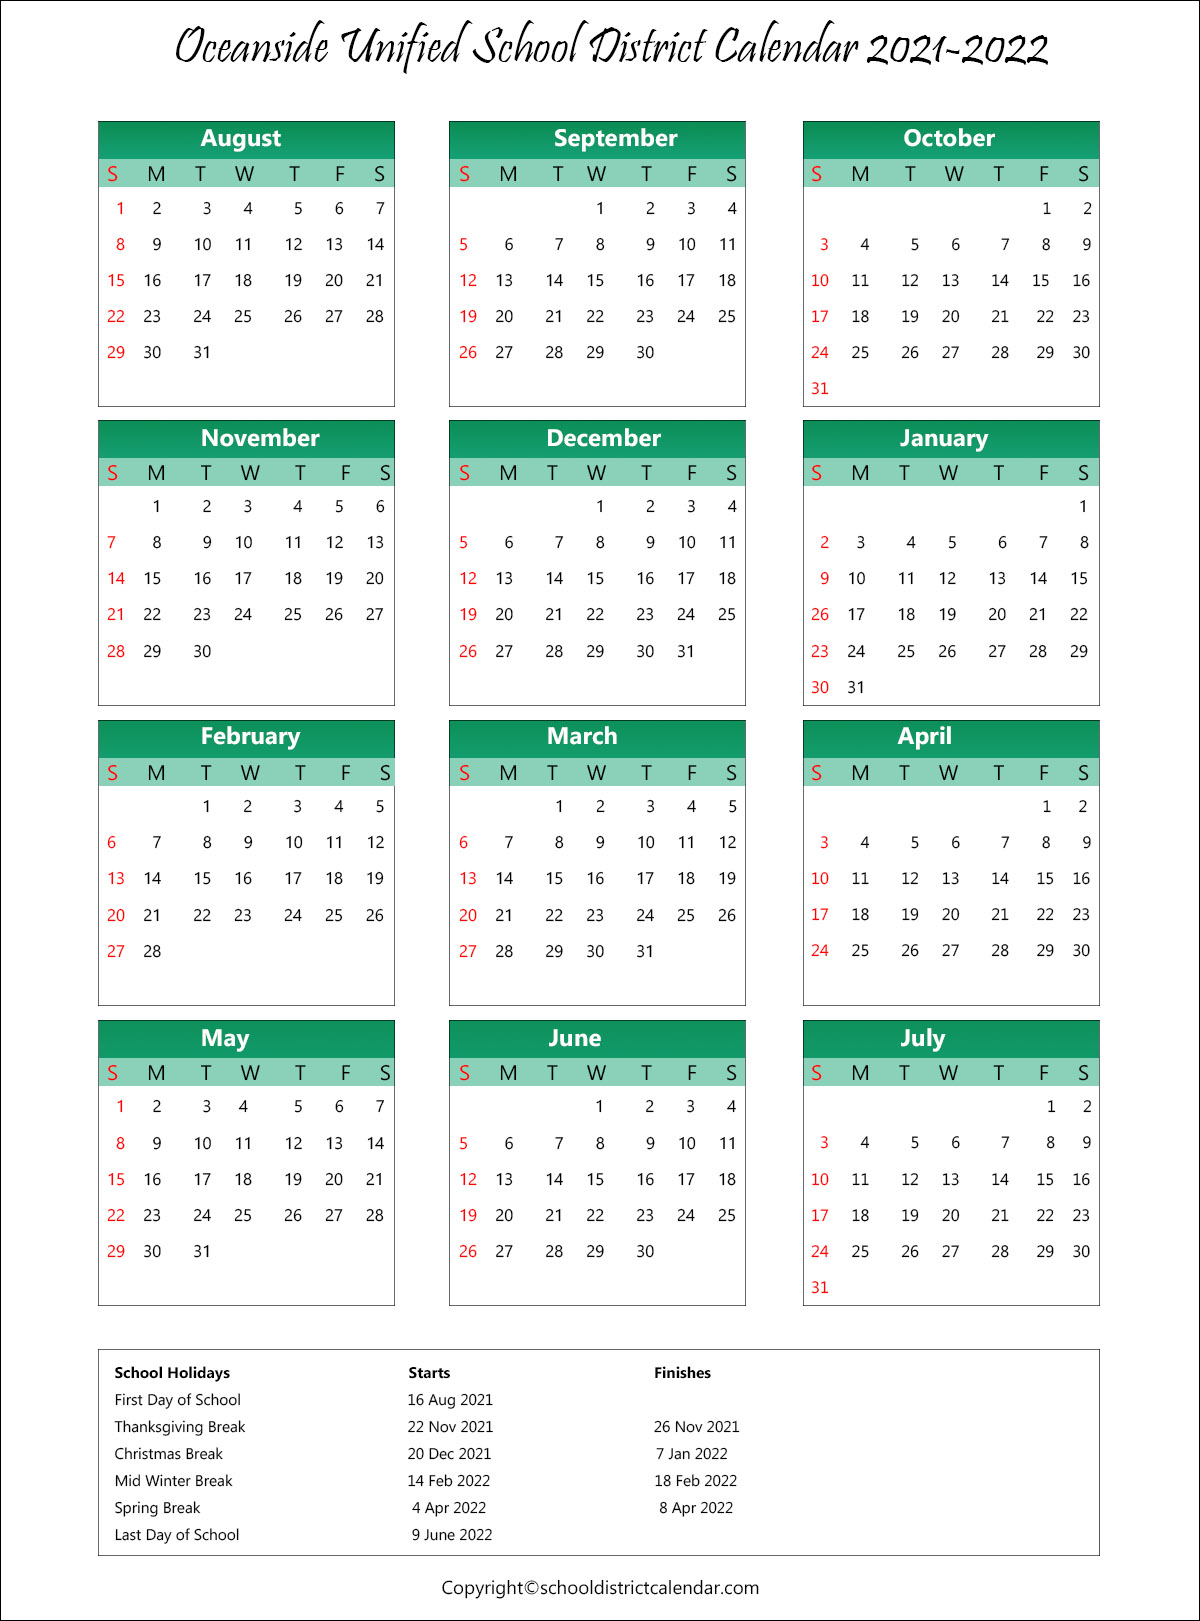 Oceanside Unified School District, California Calendar Holidays 2021